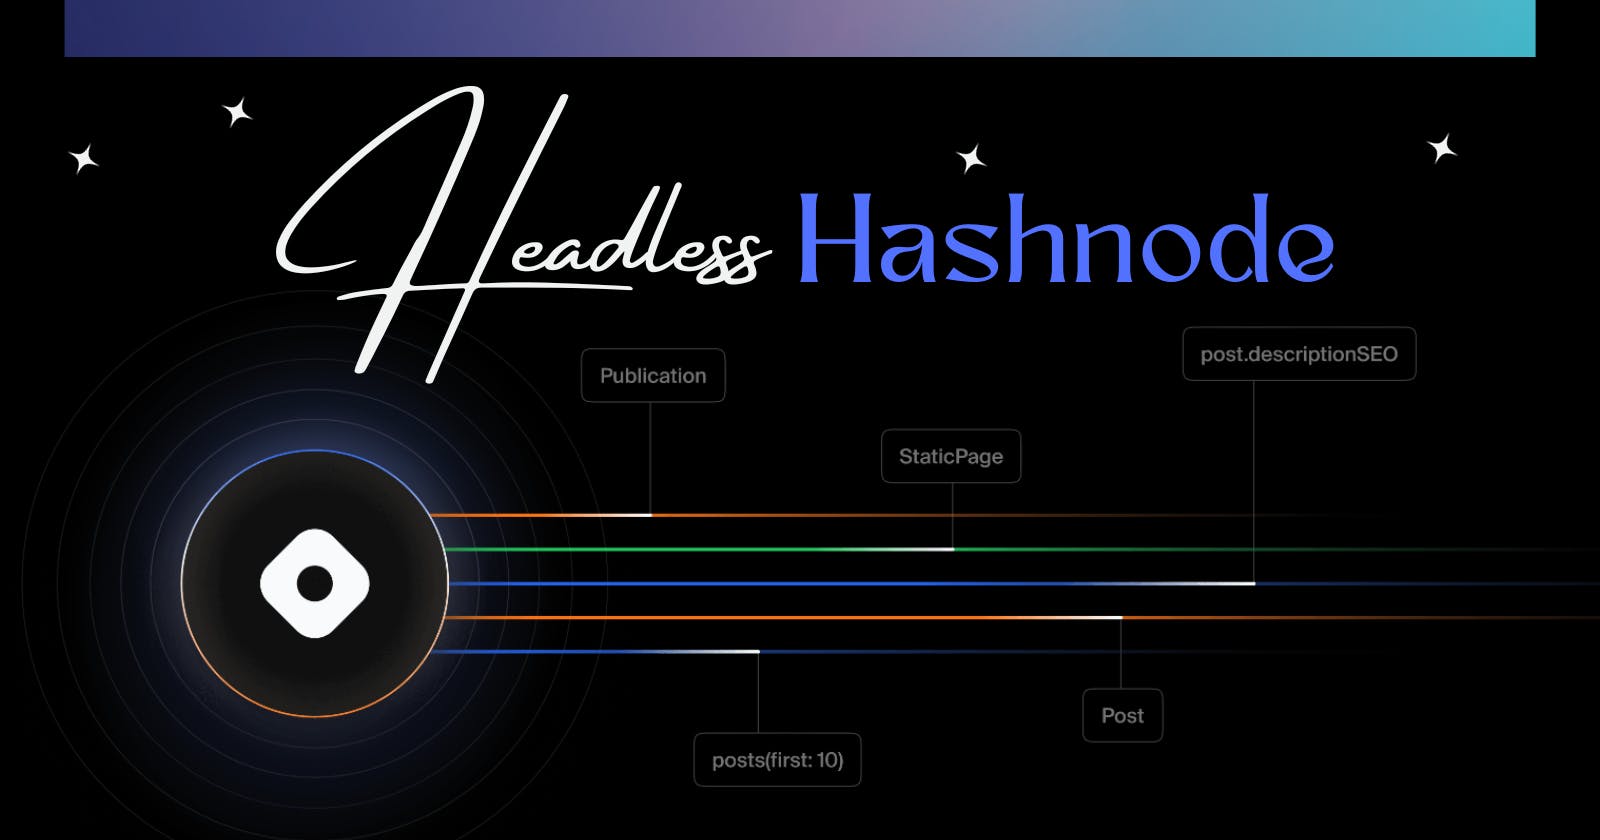 Going Headless with Hashnode